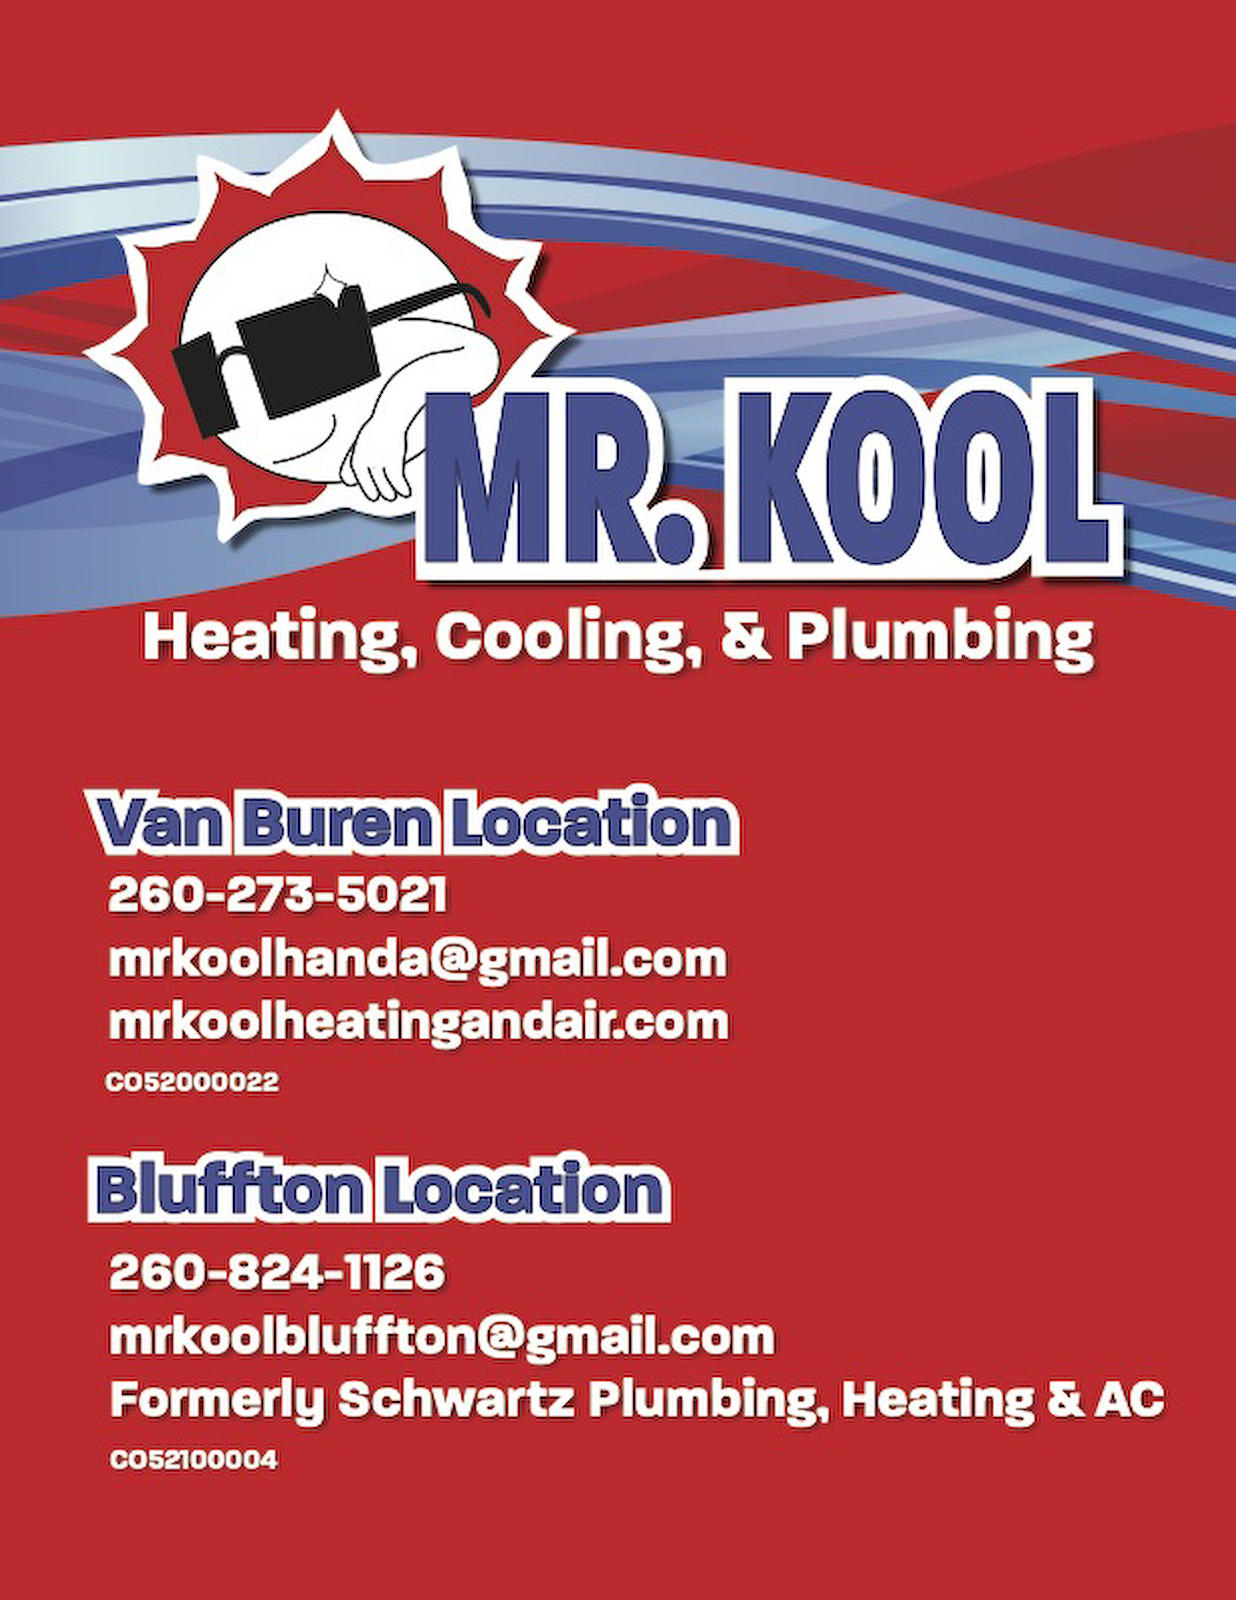 Mr. Kool Heating, Cooling, & Plumbing